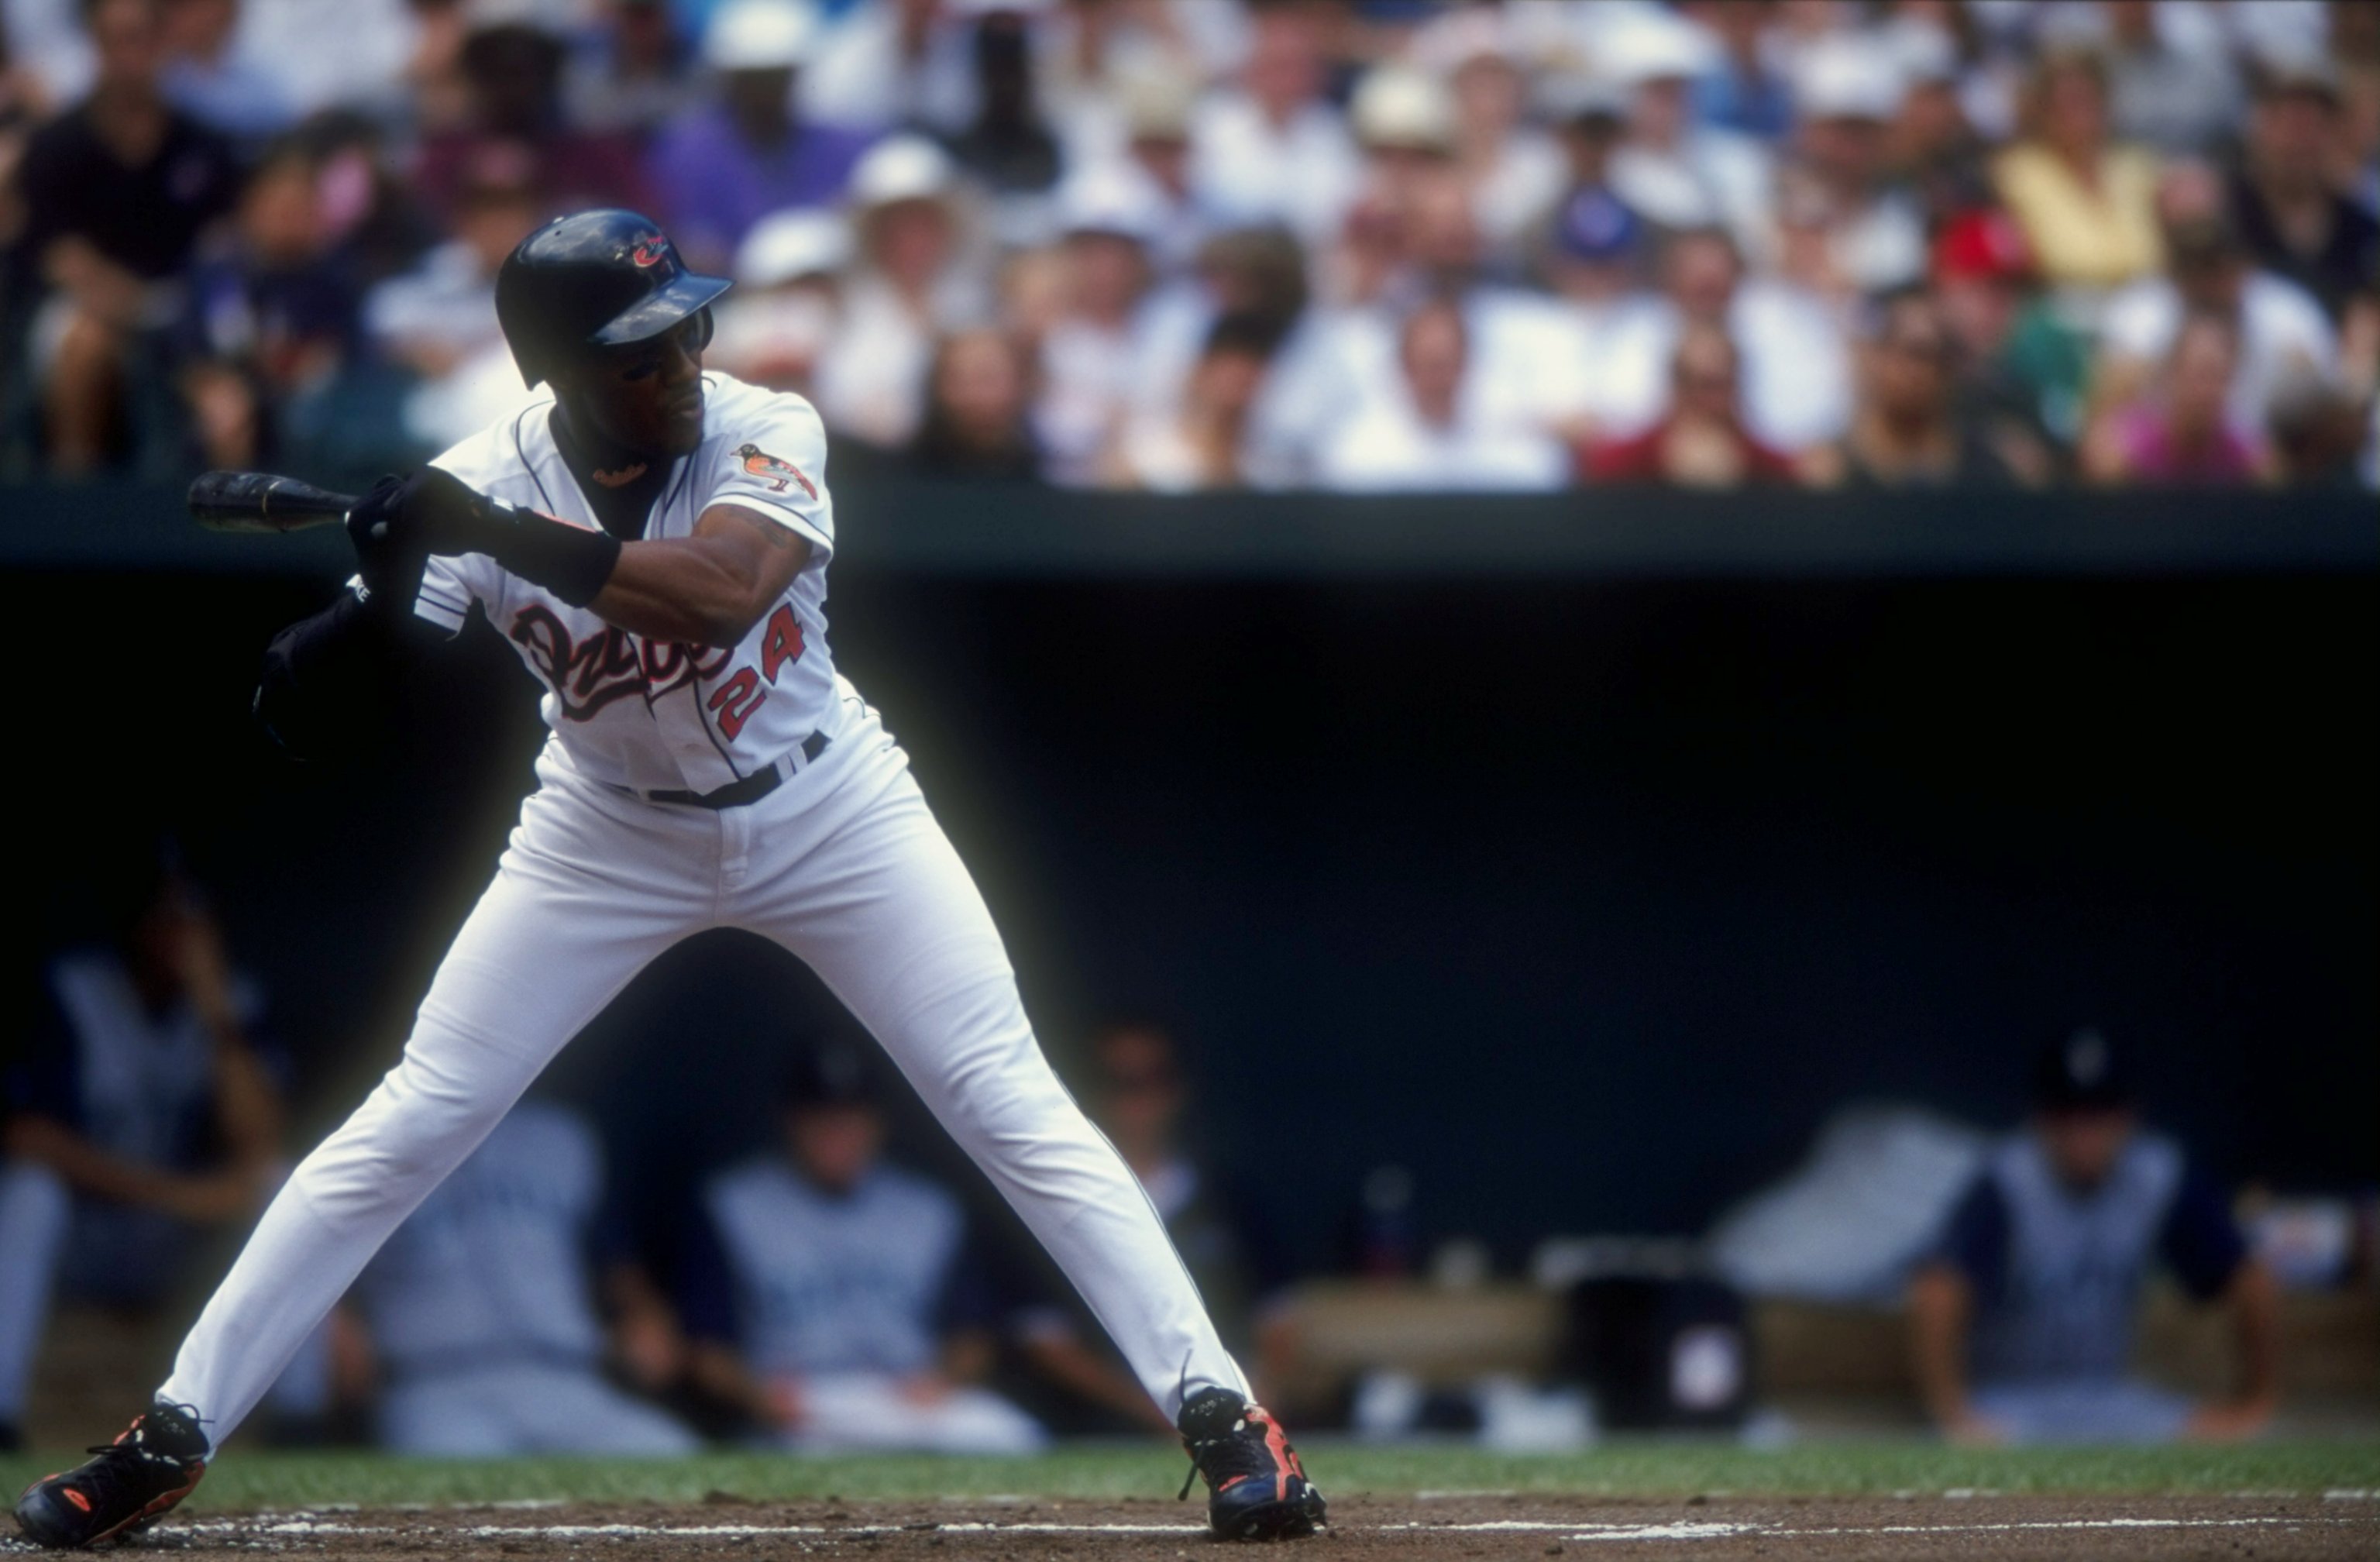 Rickey Henderson Home Run Swing - 1999 HR #12 